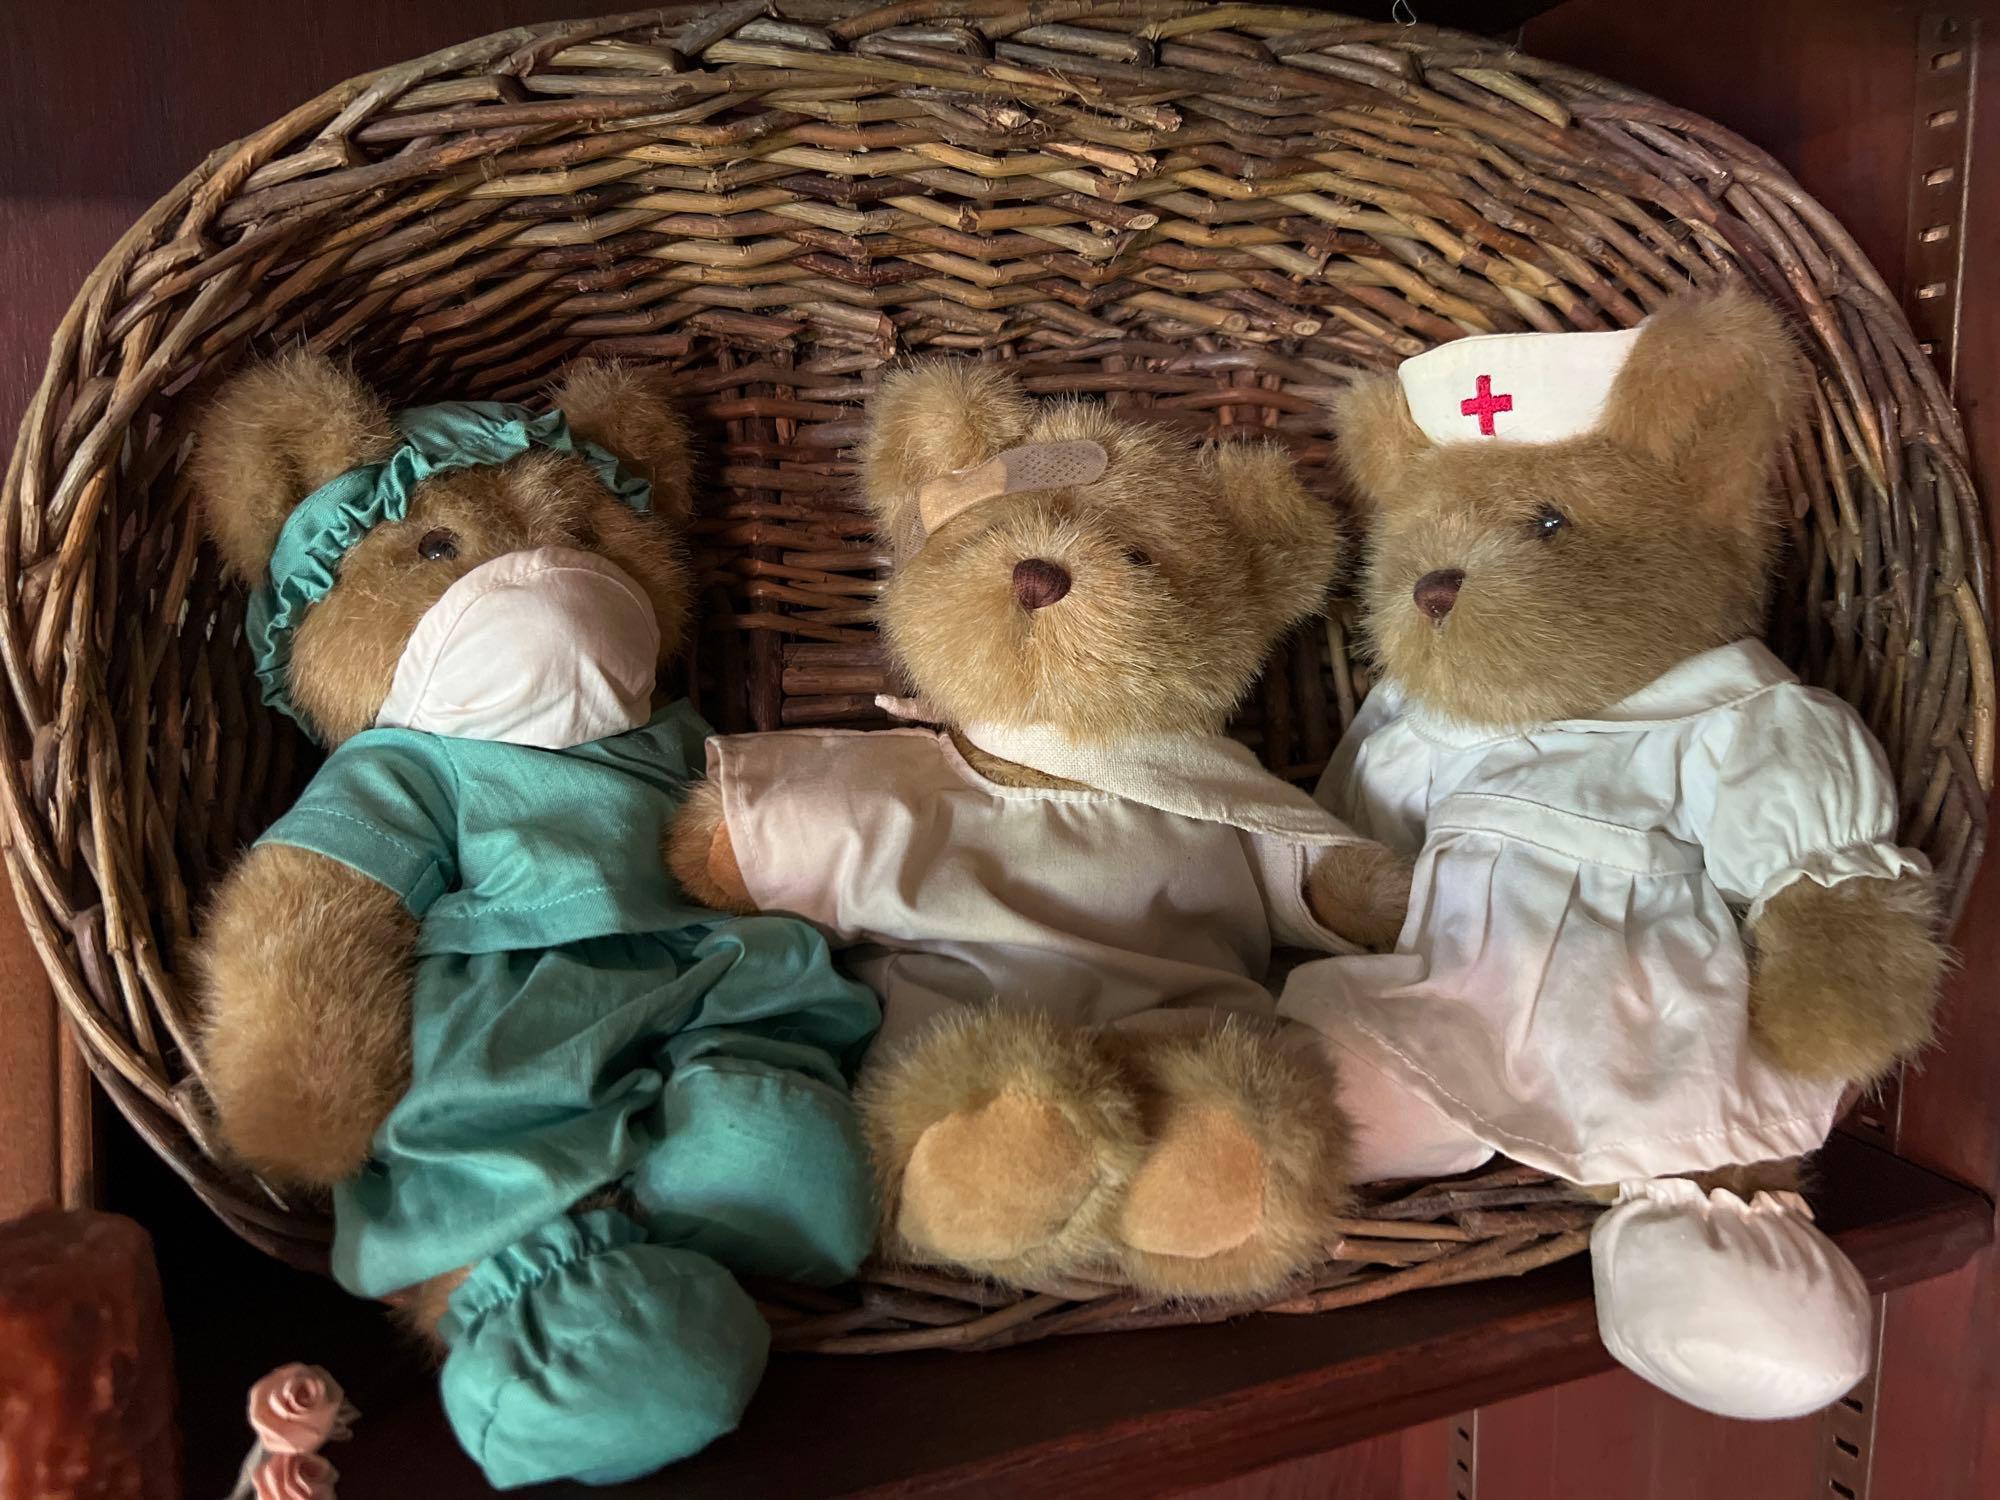 Stuffed Teddy Bears, Decor, Clock